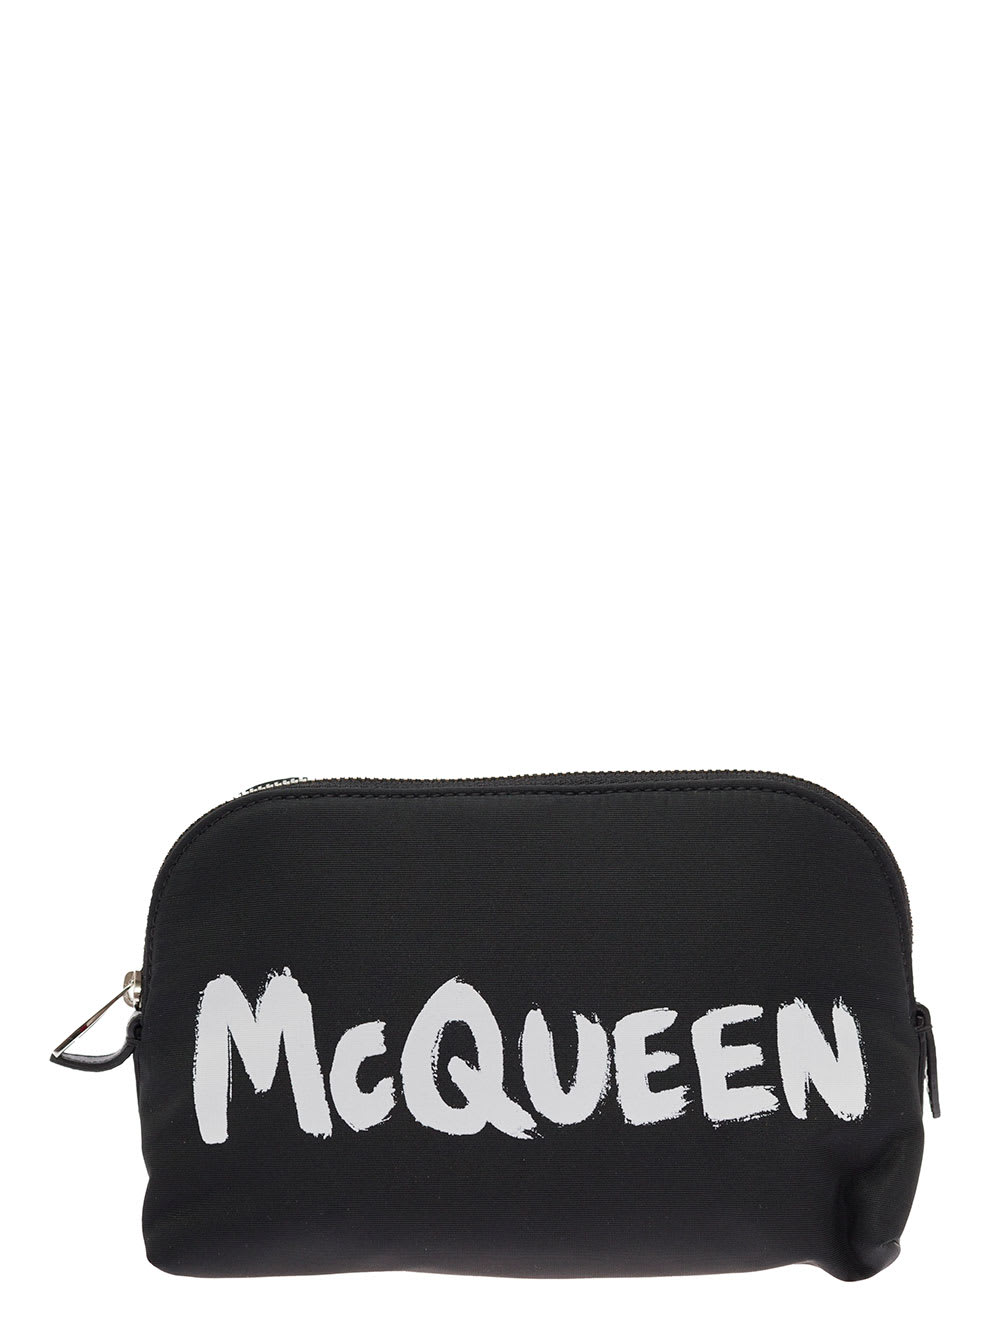 Alexander Mcqueen Woman Black Nylon Clutch Bag With Logo